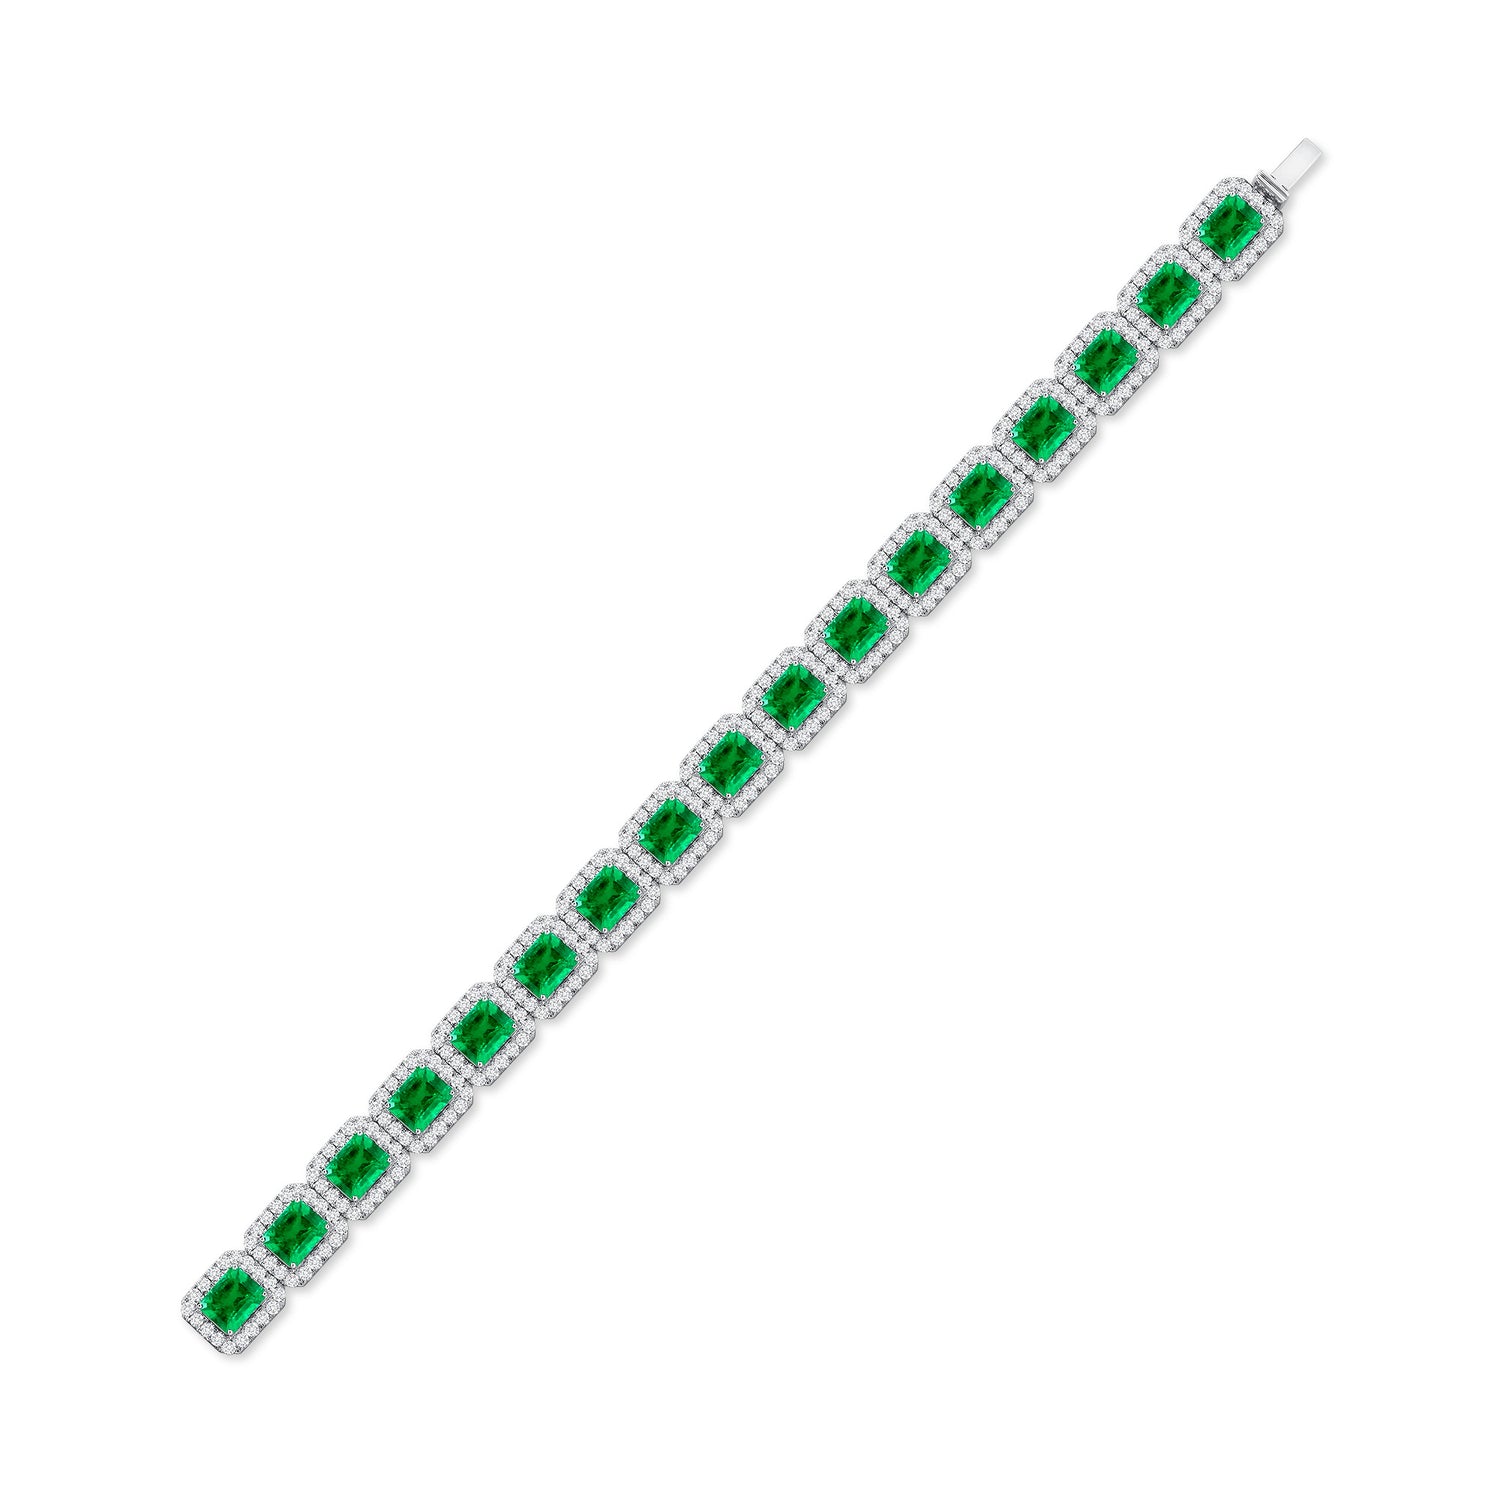 Emerald Cut Emerald and Melee Diamond Bracelet